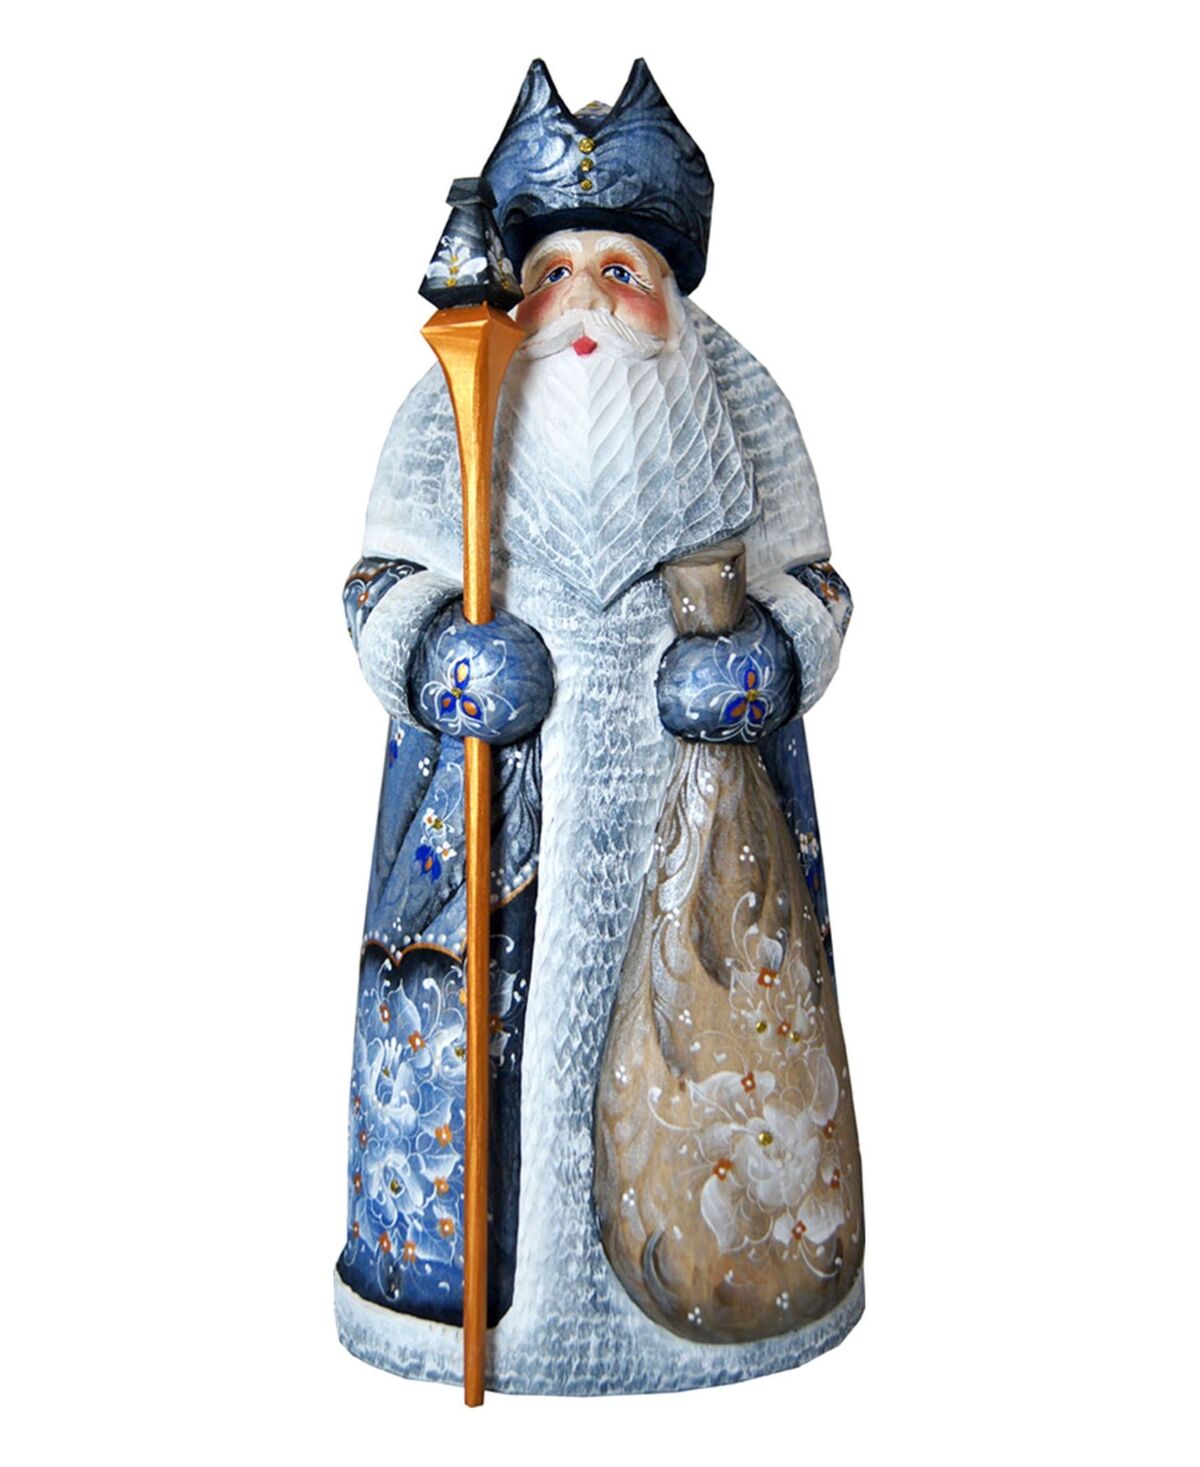 G.DeBrekht Woodcarved and Hand Painted Ornamental Santa Blue Figurine - Multi